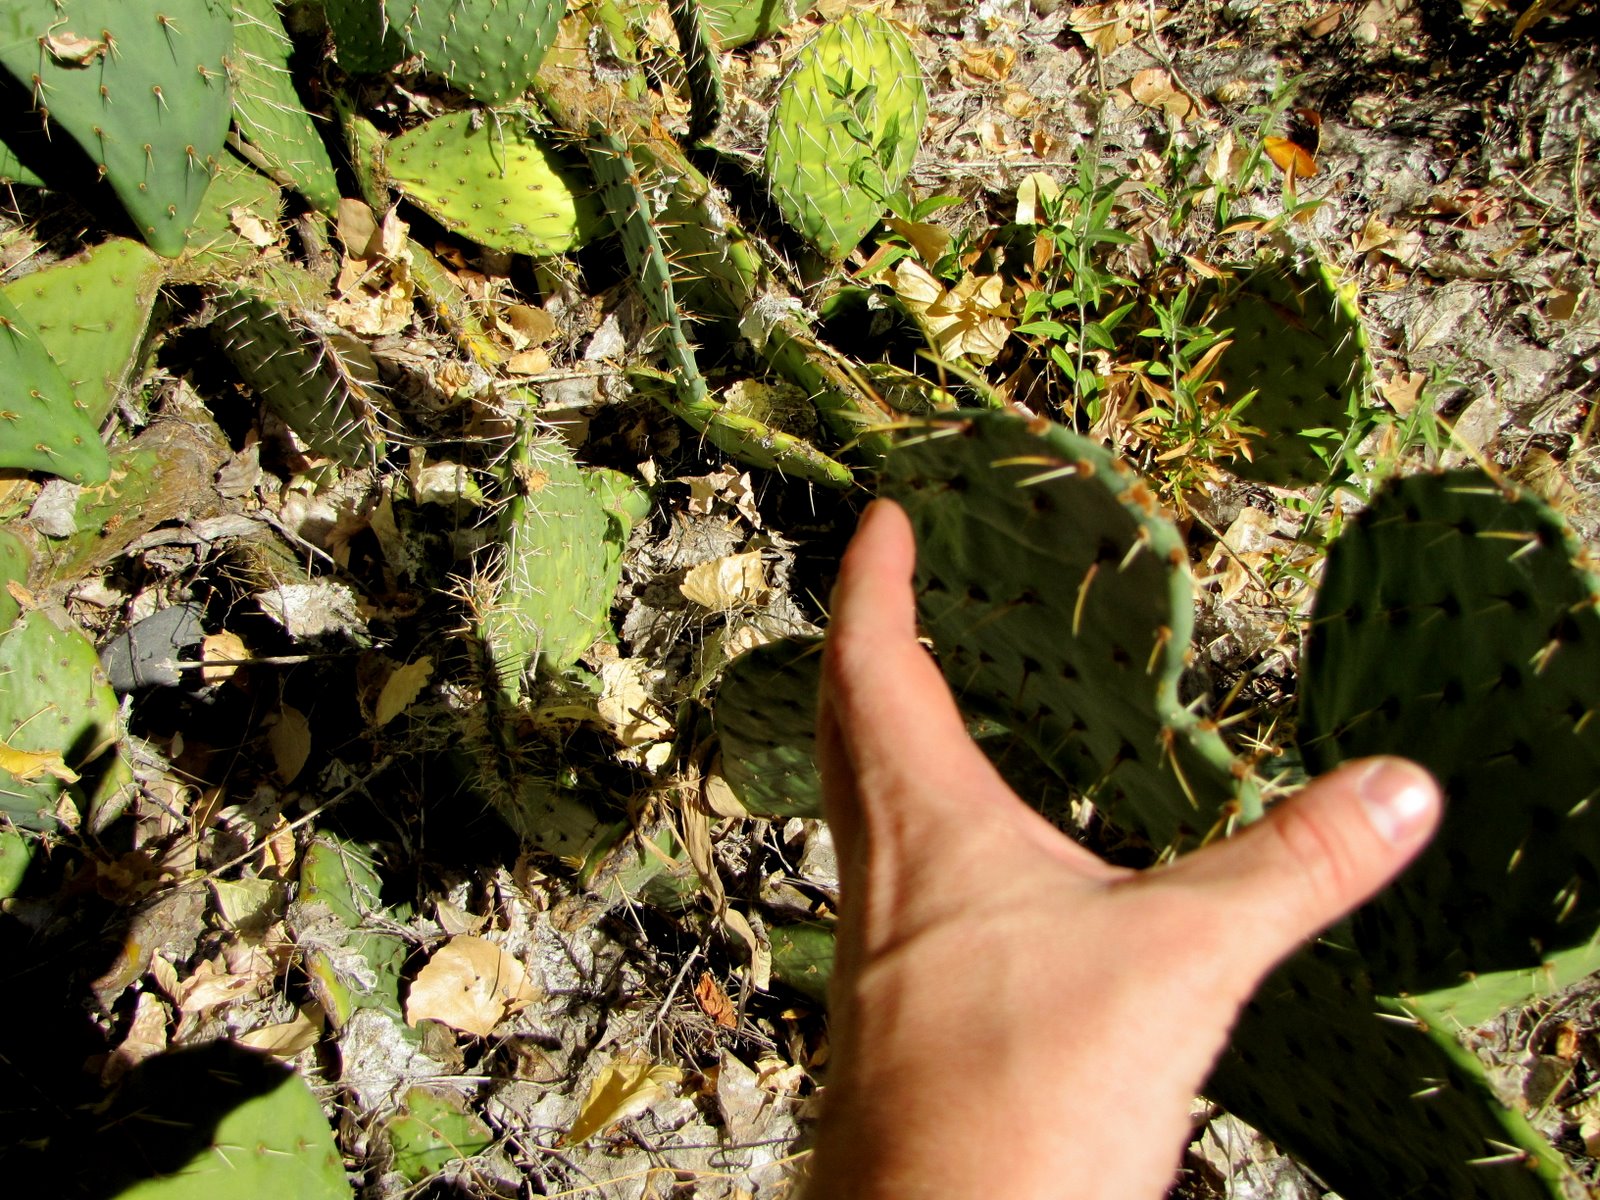 Ne nyúlj a kaktuszhoz!

Don't touch the cactus!